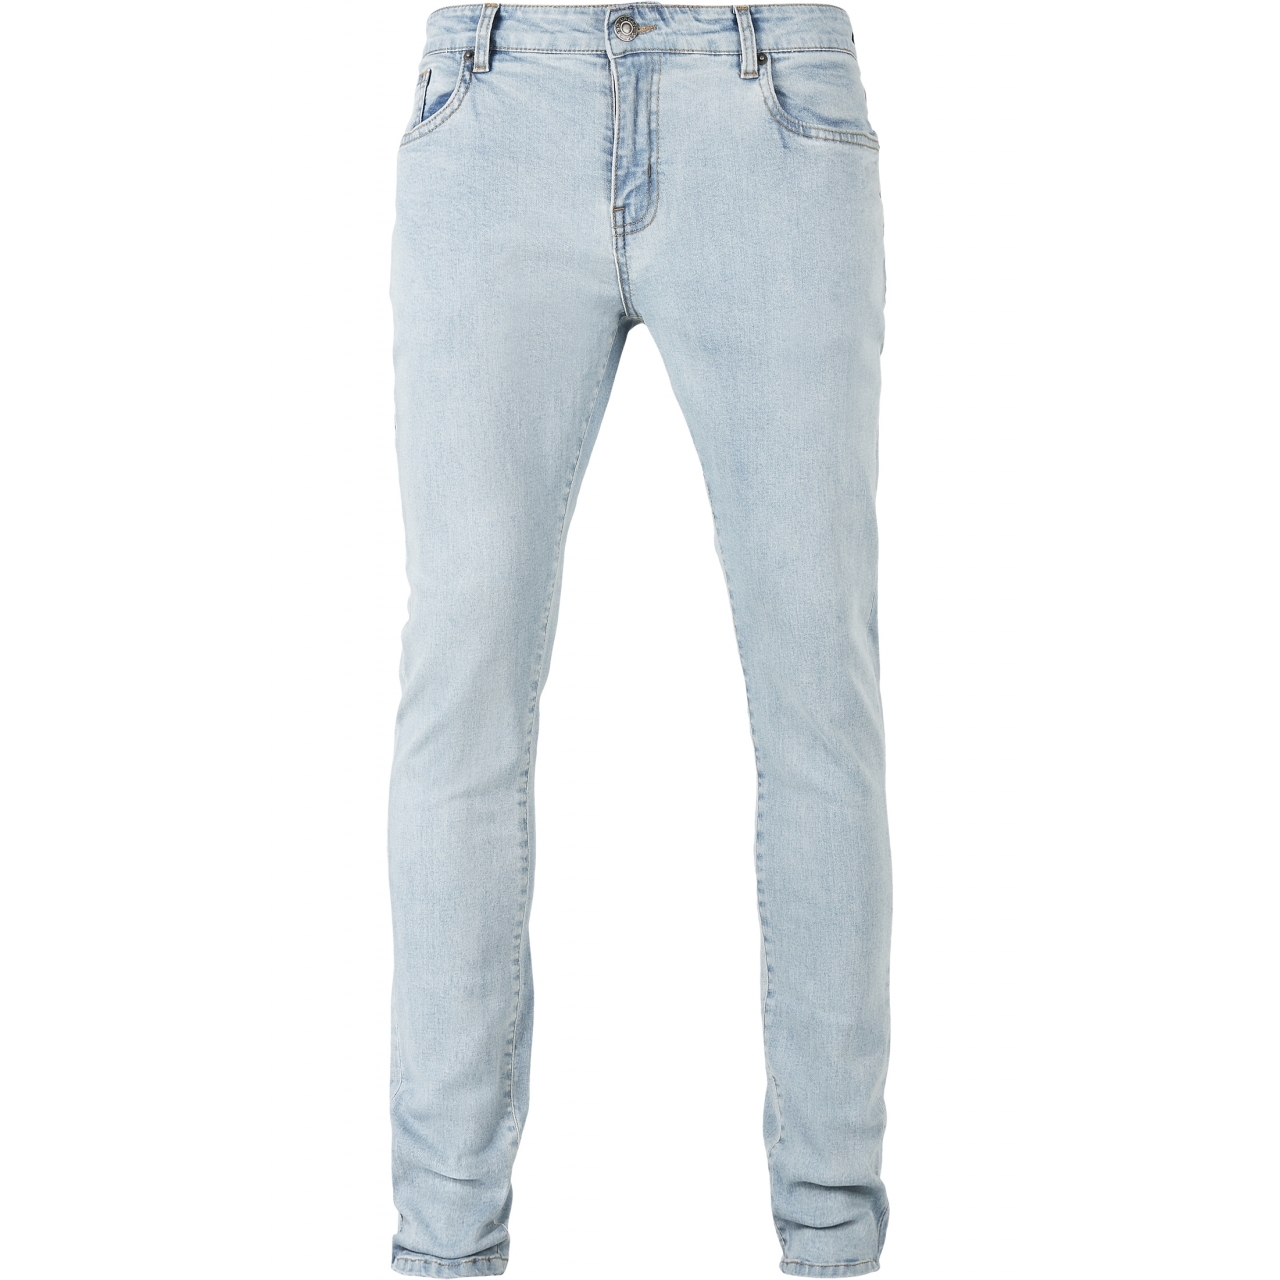 Džíny Urban Classics Slim Fit Zip Jeans - modré, 32/32